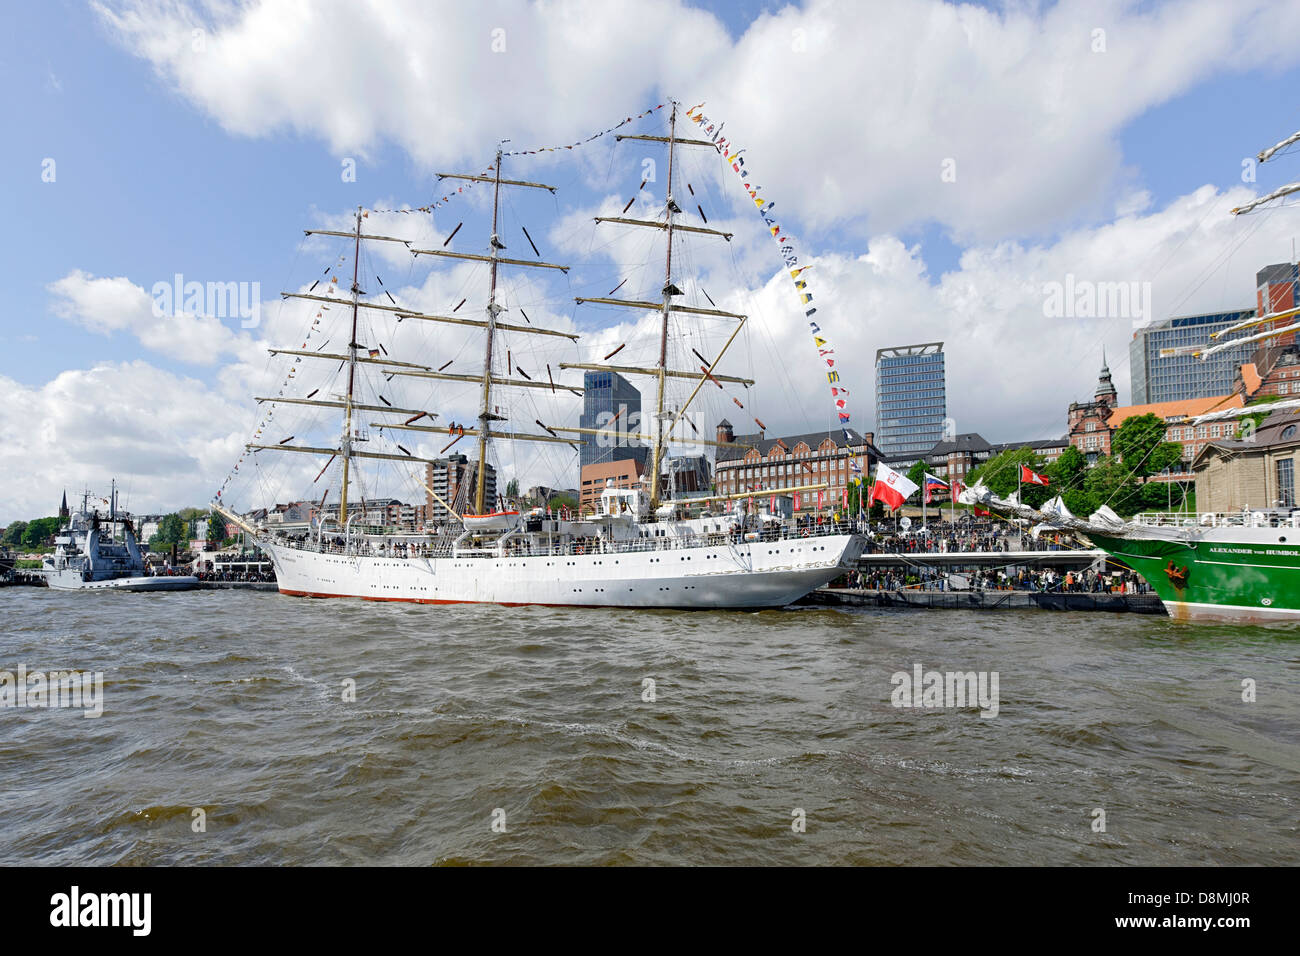 Sailing ship in the harbor, Hamburg, Germany Stock Photo